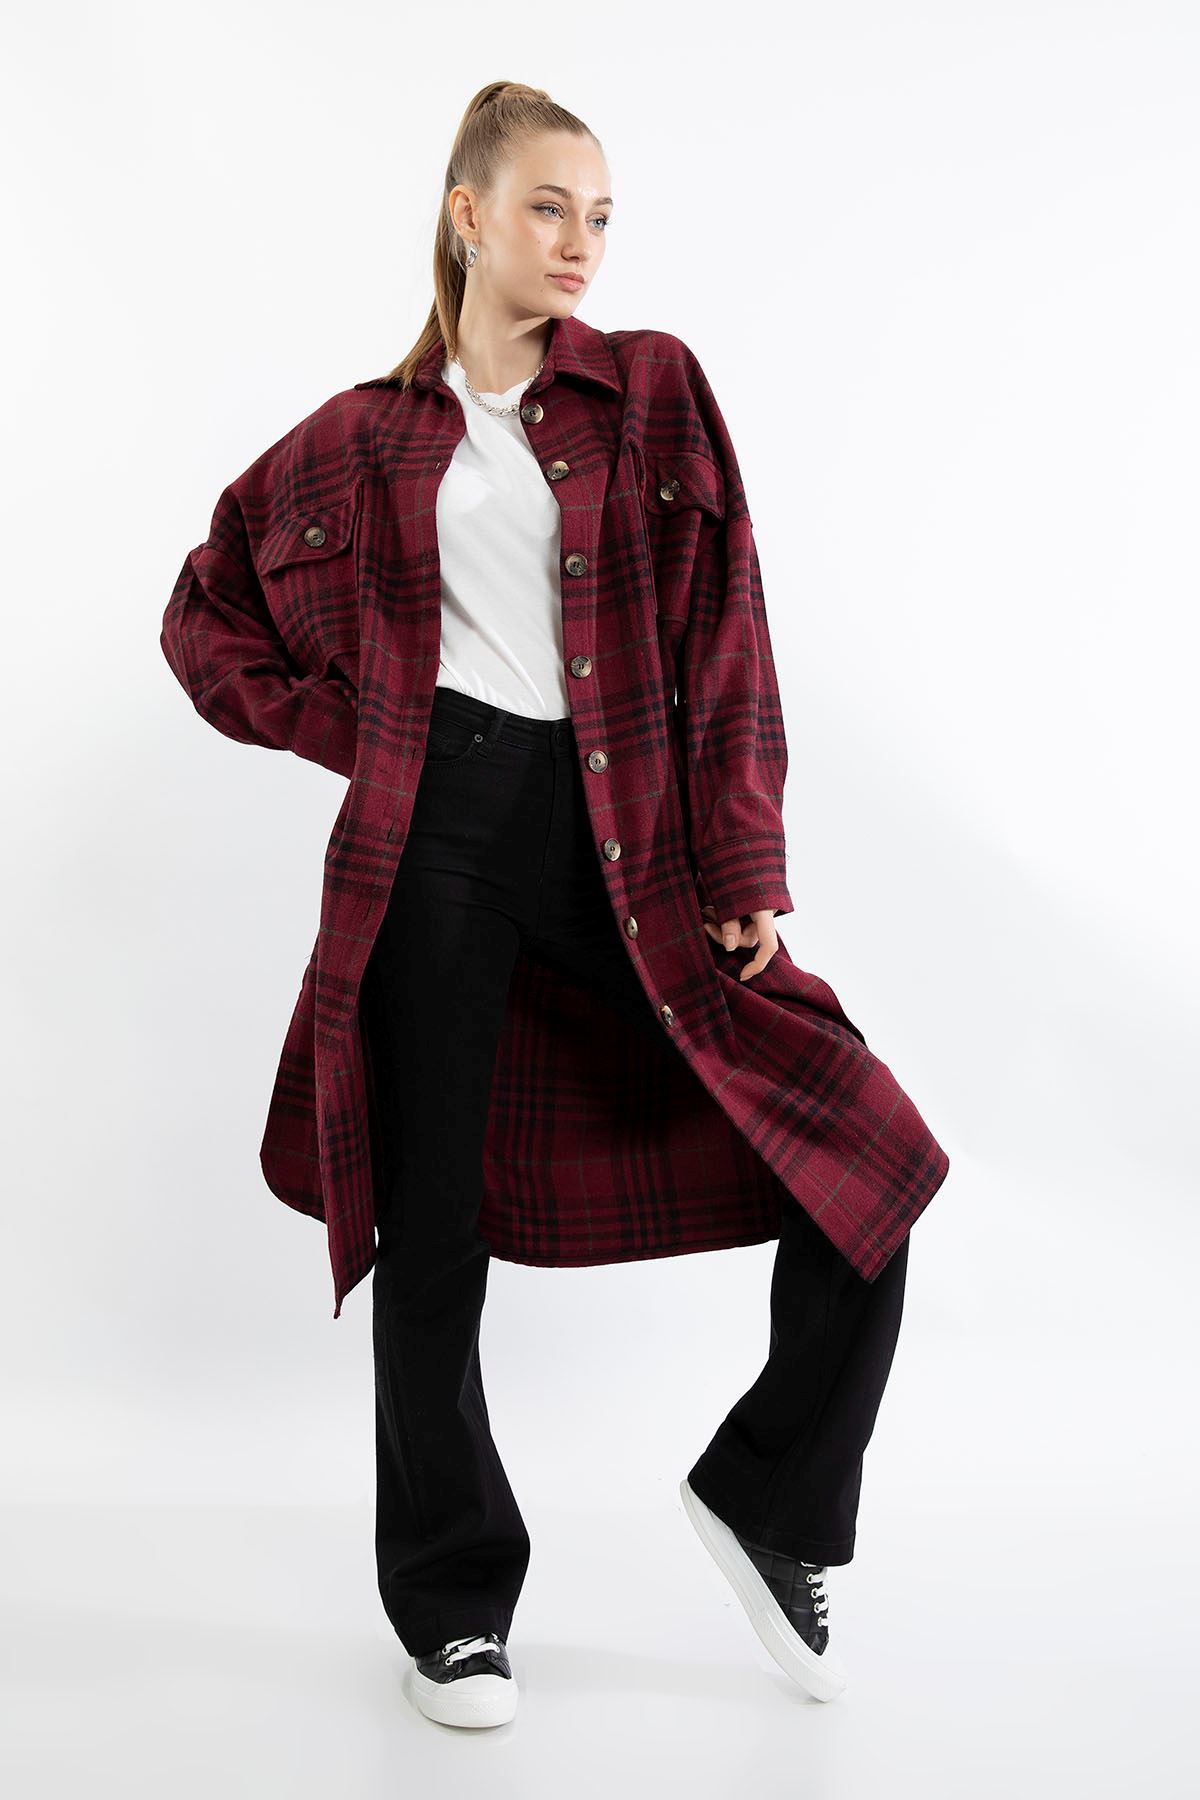 Lumberjack Fabric Long Sleeve Long Oversize Plaid Women'S Shirt - Burgundy